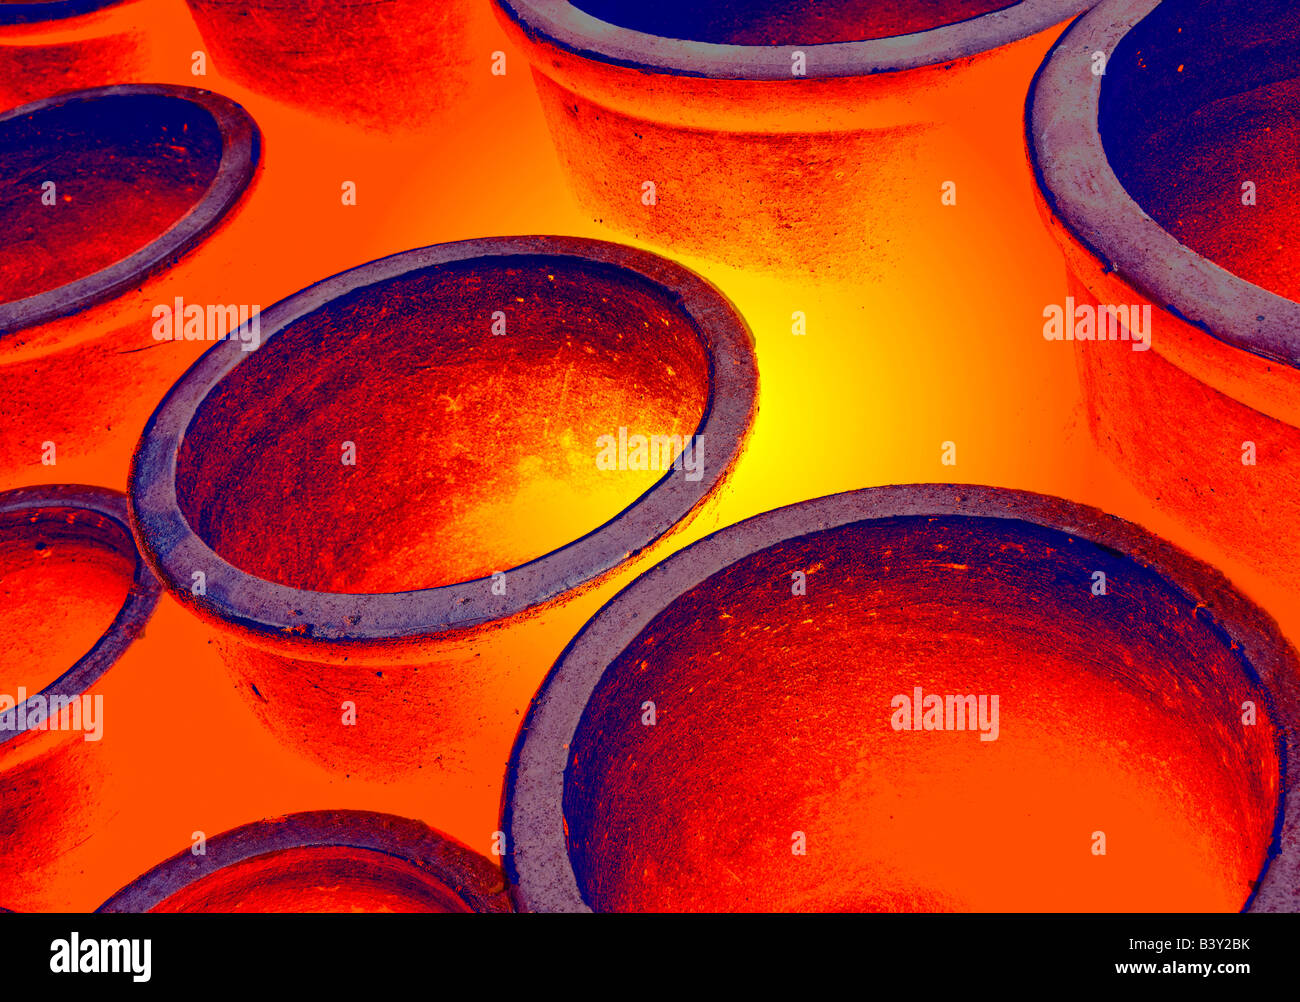 Illuminated round bowls, close up Stock Photo